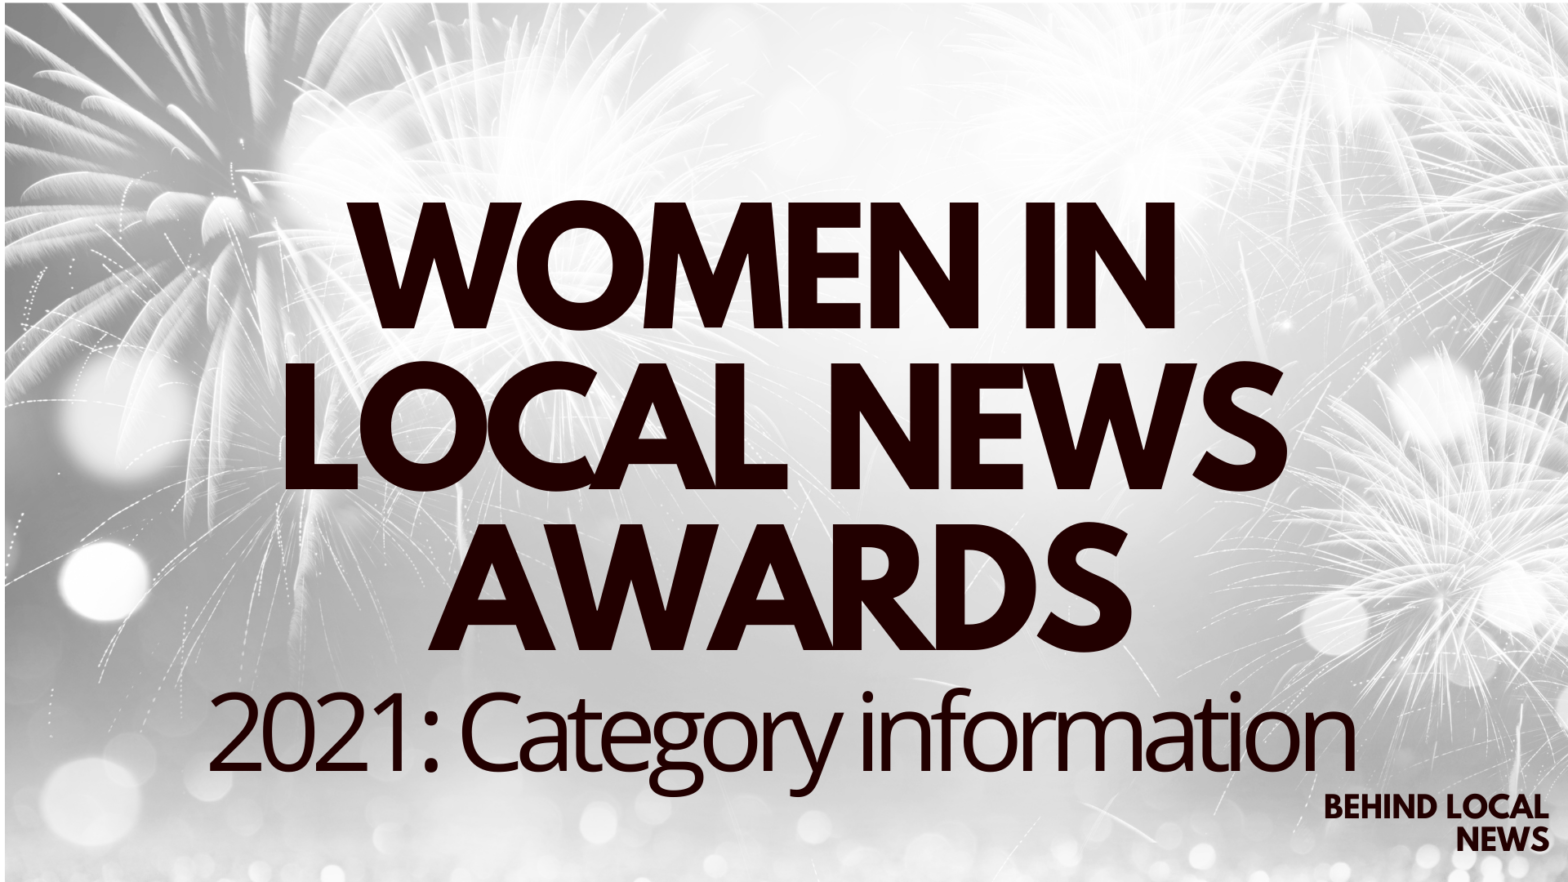 Deadline Day For Women In Local News Awards